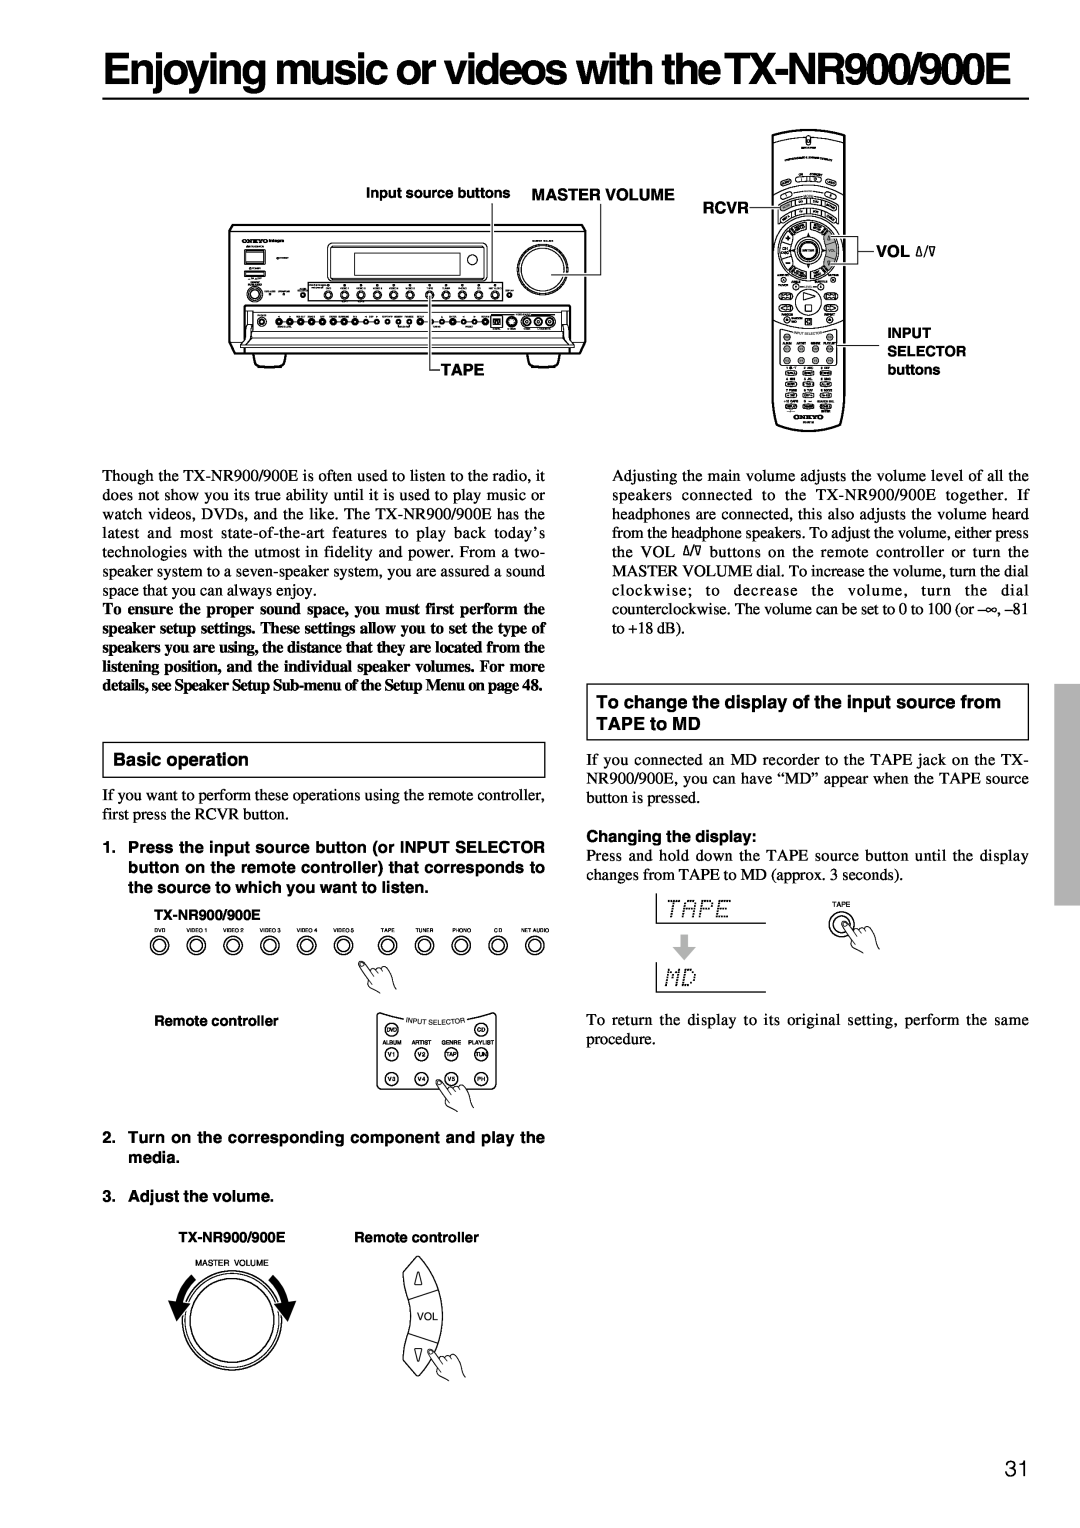 Onkyo TX-NR900E instruction manual Enjoying music or videos with theTX-NR900/900E, Basic operation 